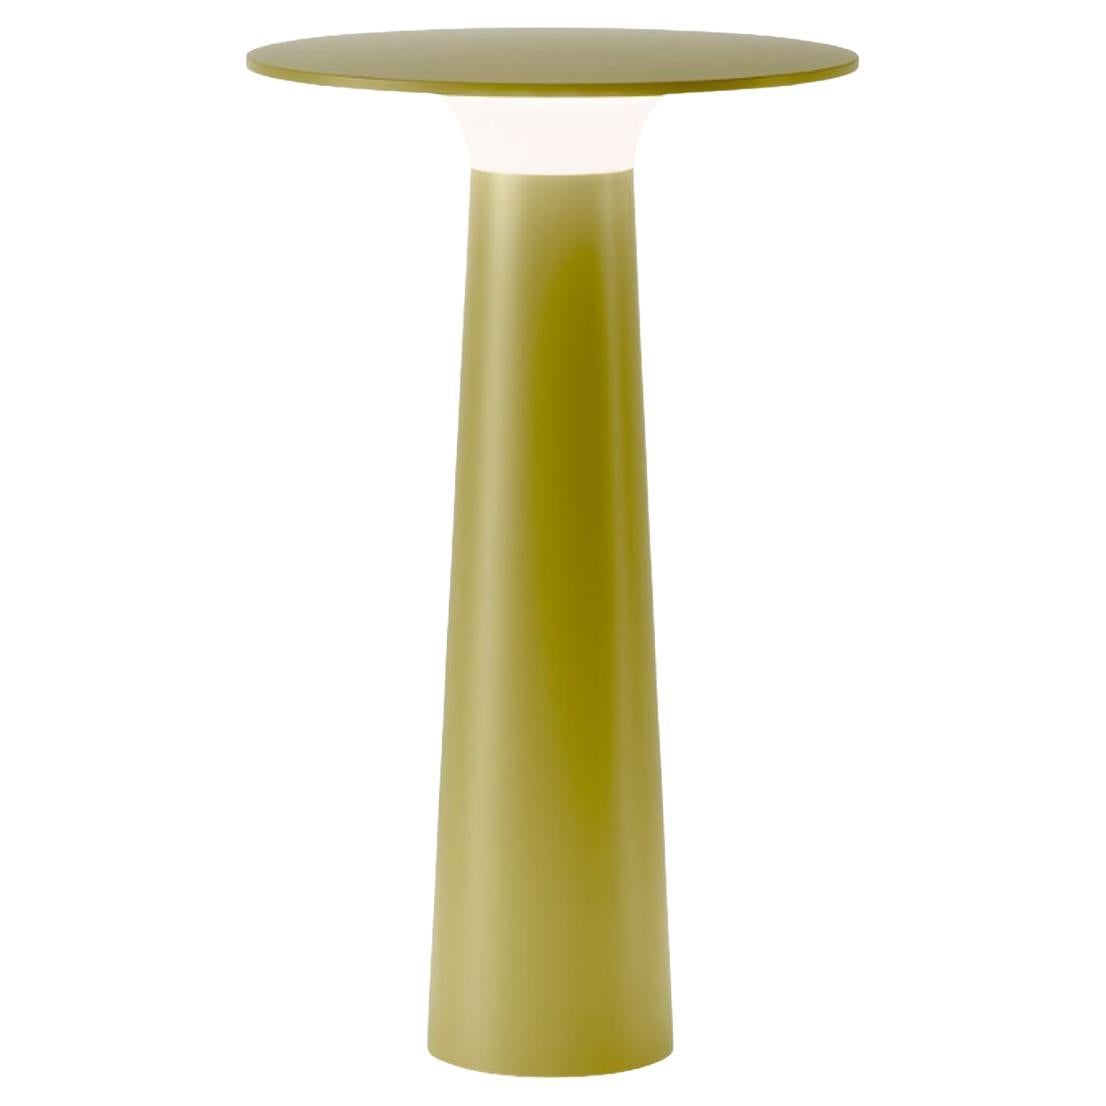 Klaus Nolting 'Lix' Portable Outdoor Aluminum Table Lamp in Yellow for IP44de